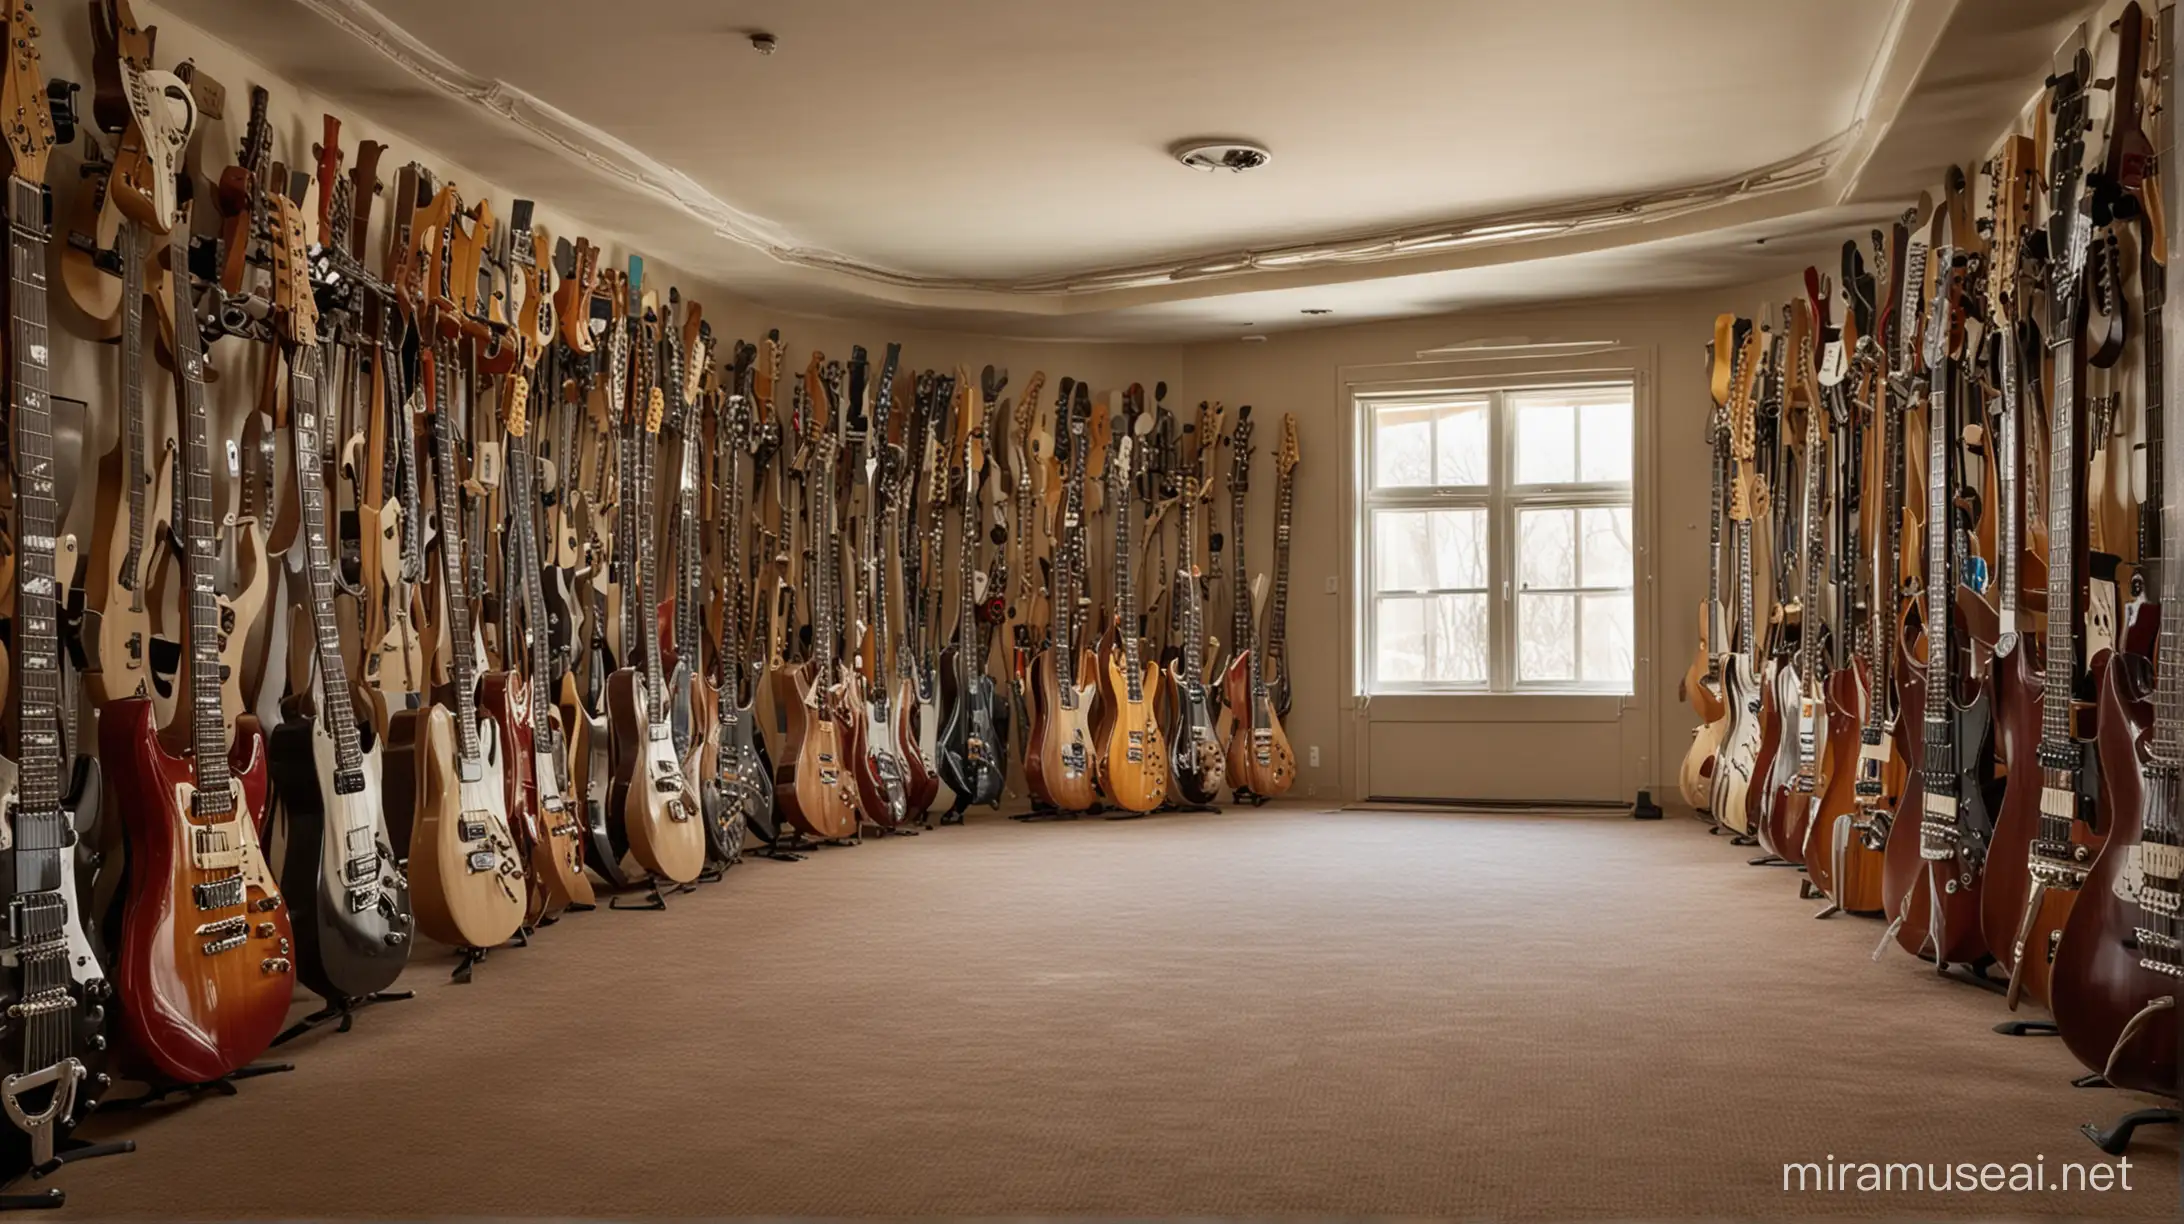 inside a room made of guitars